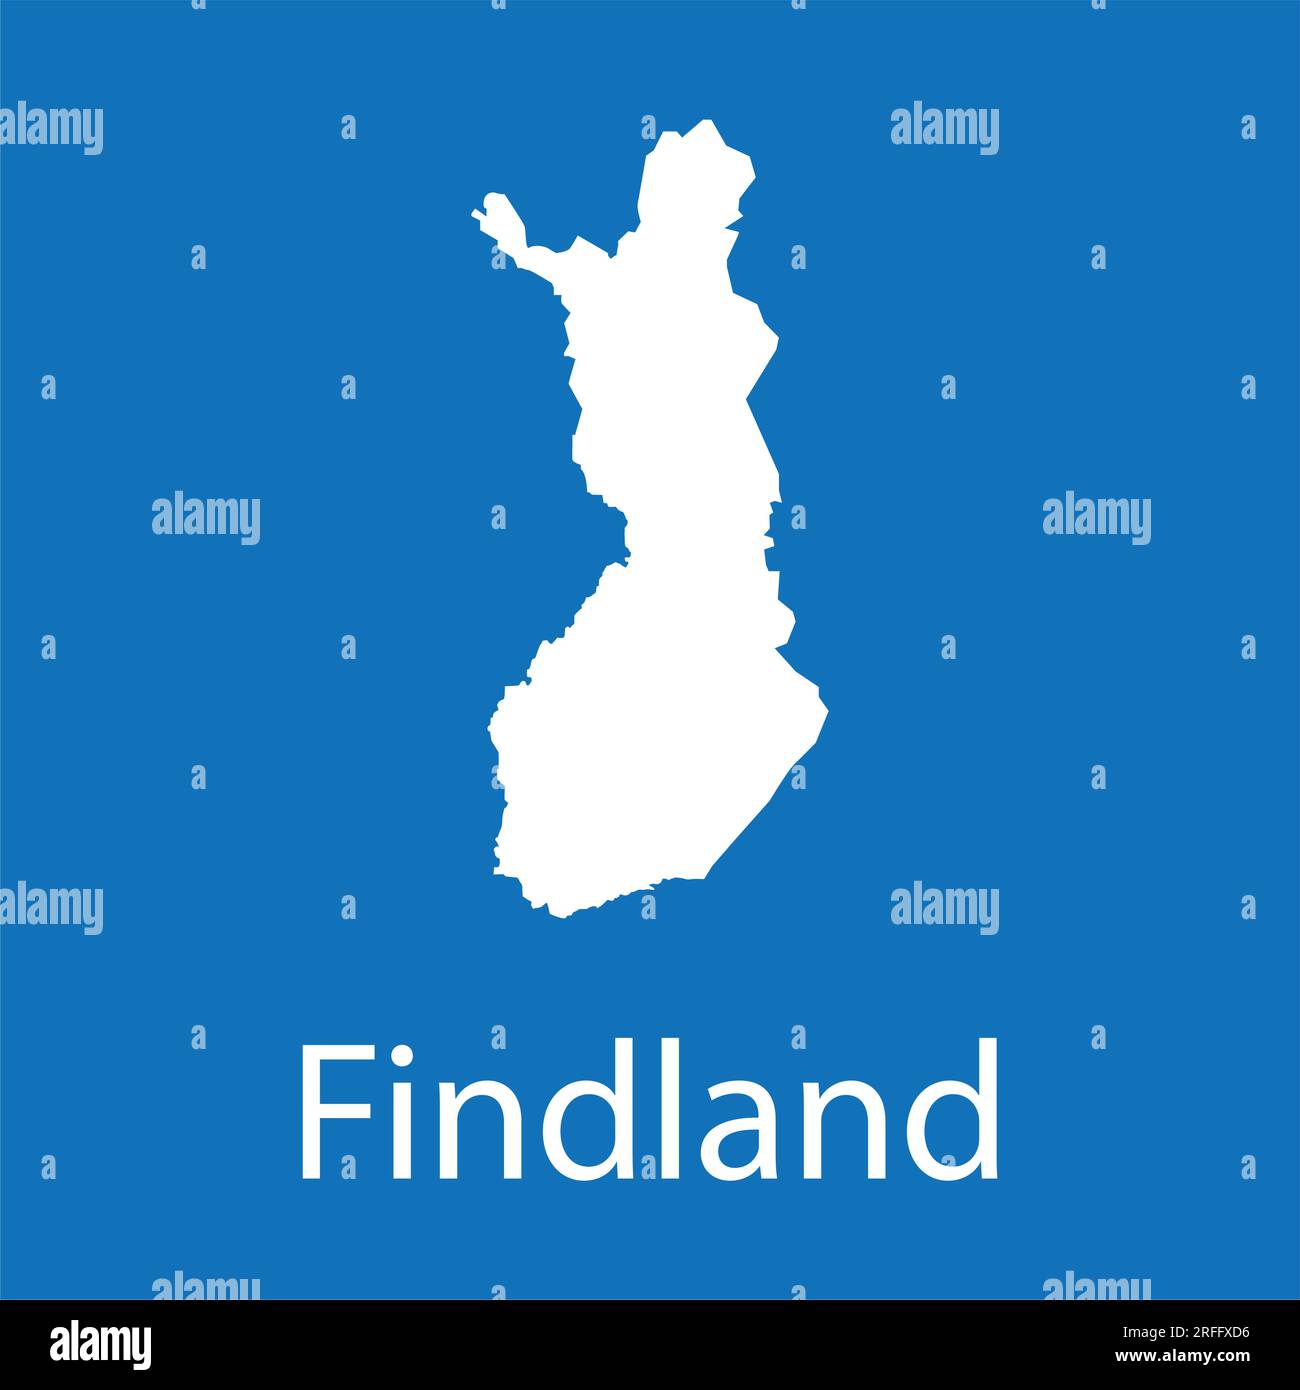 finland map icon vector illustration design Stock Vector